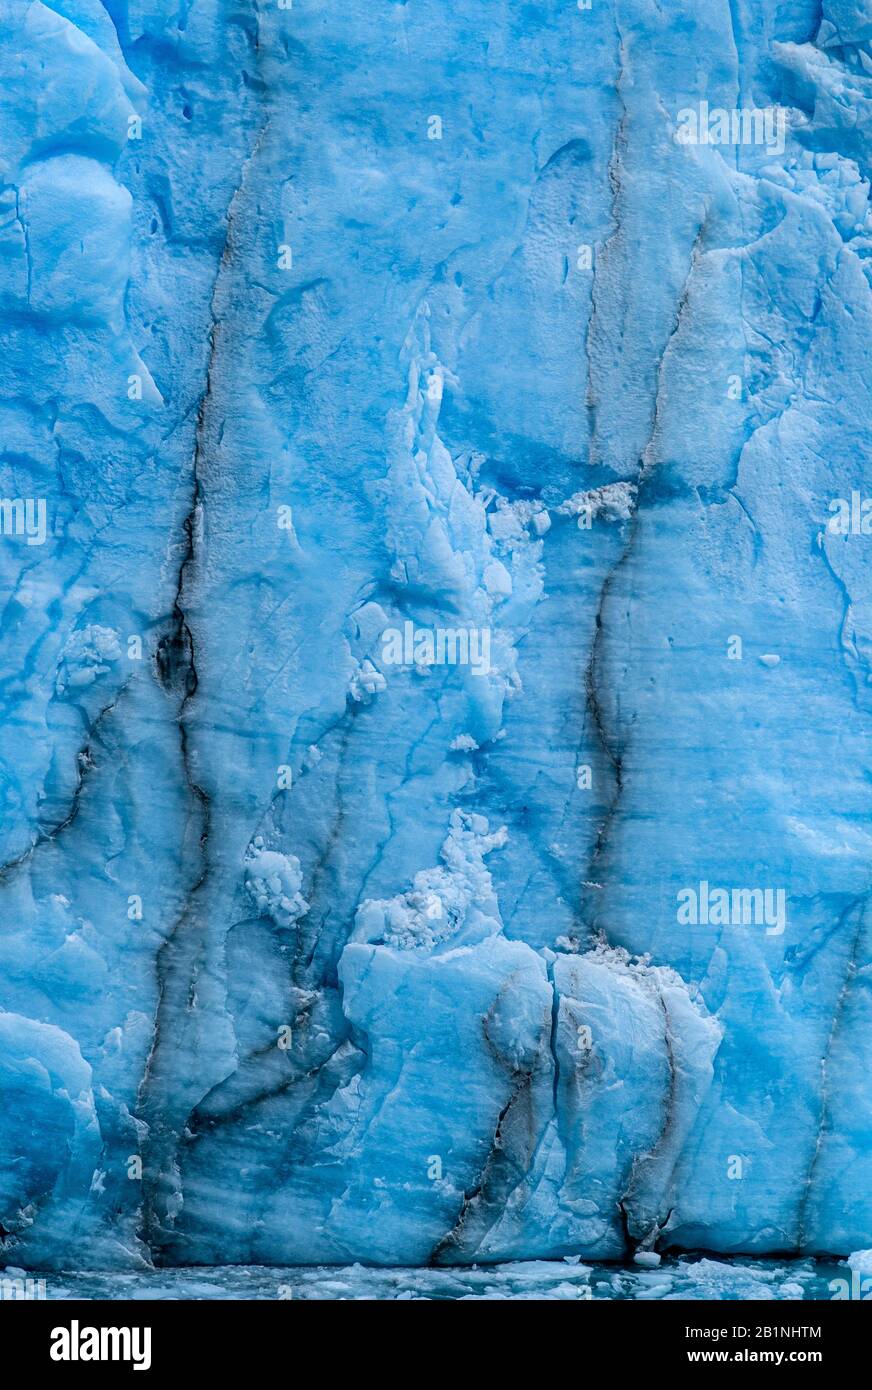 NATIONAL PARK LOS GLACIARES, ARGENTINA - CIRCA FEBRUARY 2019: Close up of the Glacier Perito Moreno, a famous landmark within the Los Glaciares Nation Stock Photo